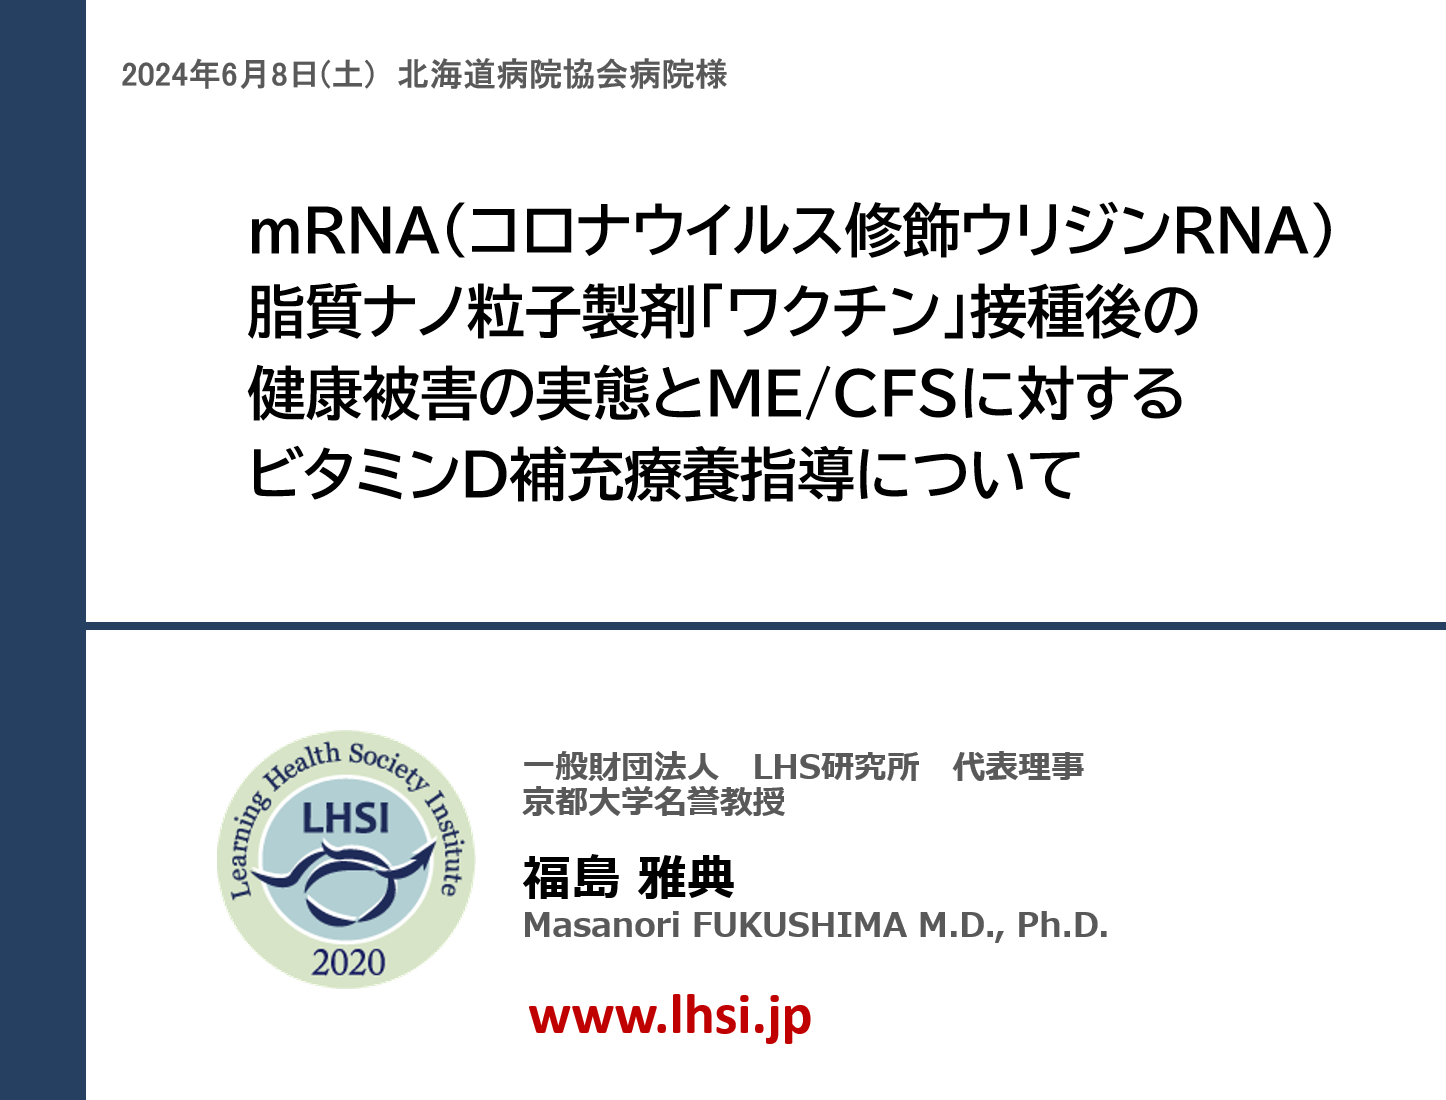 mRNA(コロナウイルス修飾ウリジンRNA)脂質ナノ粒子製剤「ワクチン」接種後の健康被害の実態とME/CFSに対するビタミンD補充療養指導について